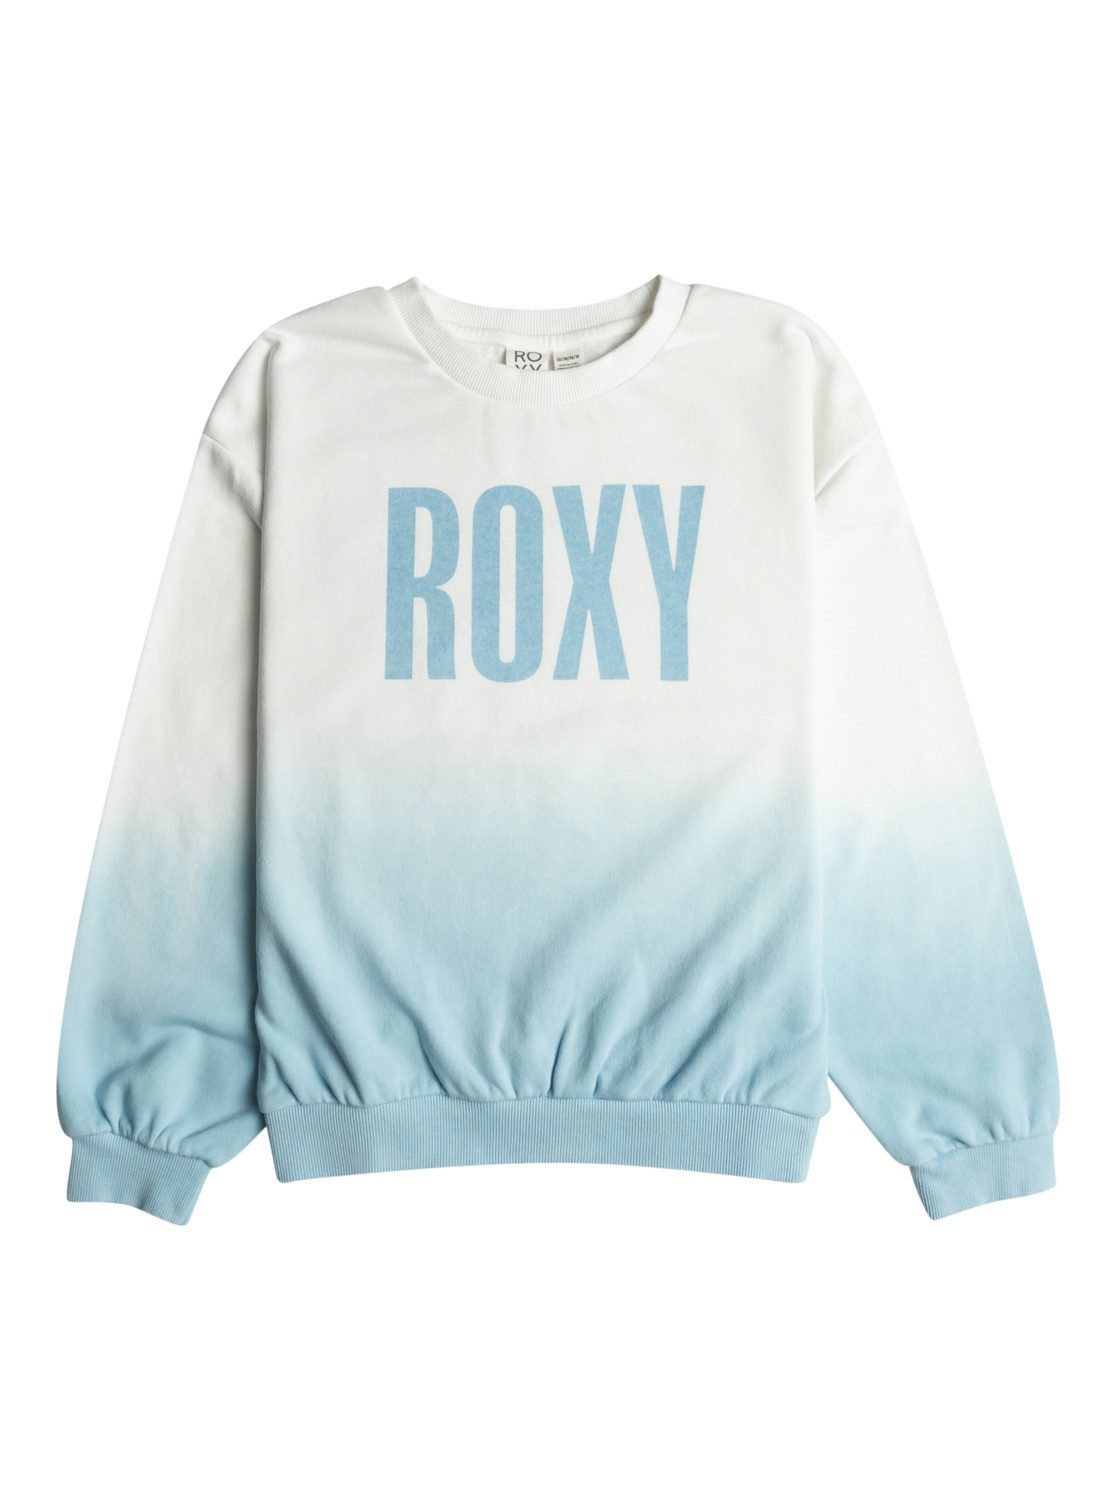 Roxy Sweatshirt Im So Blue